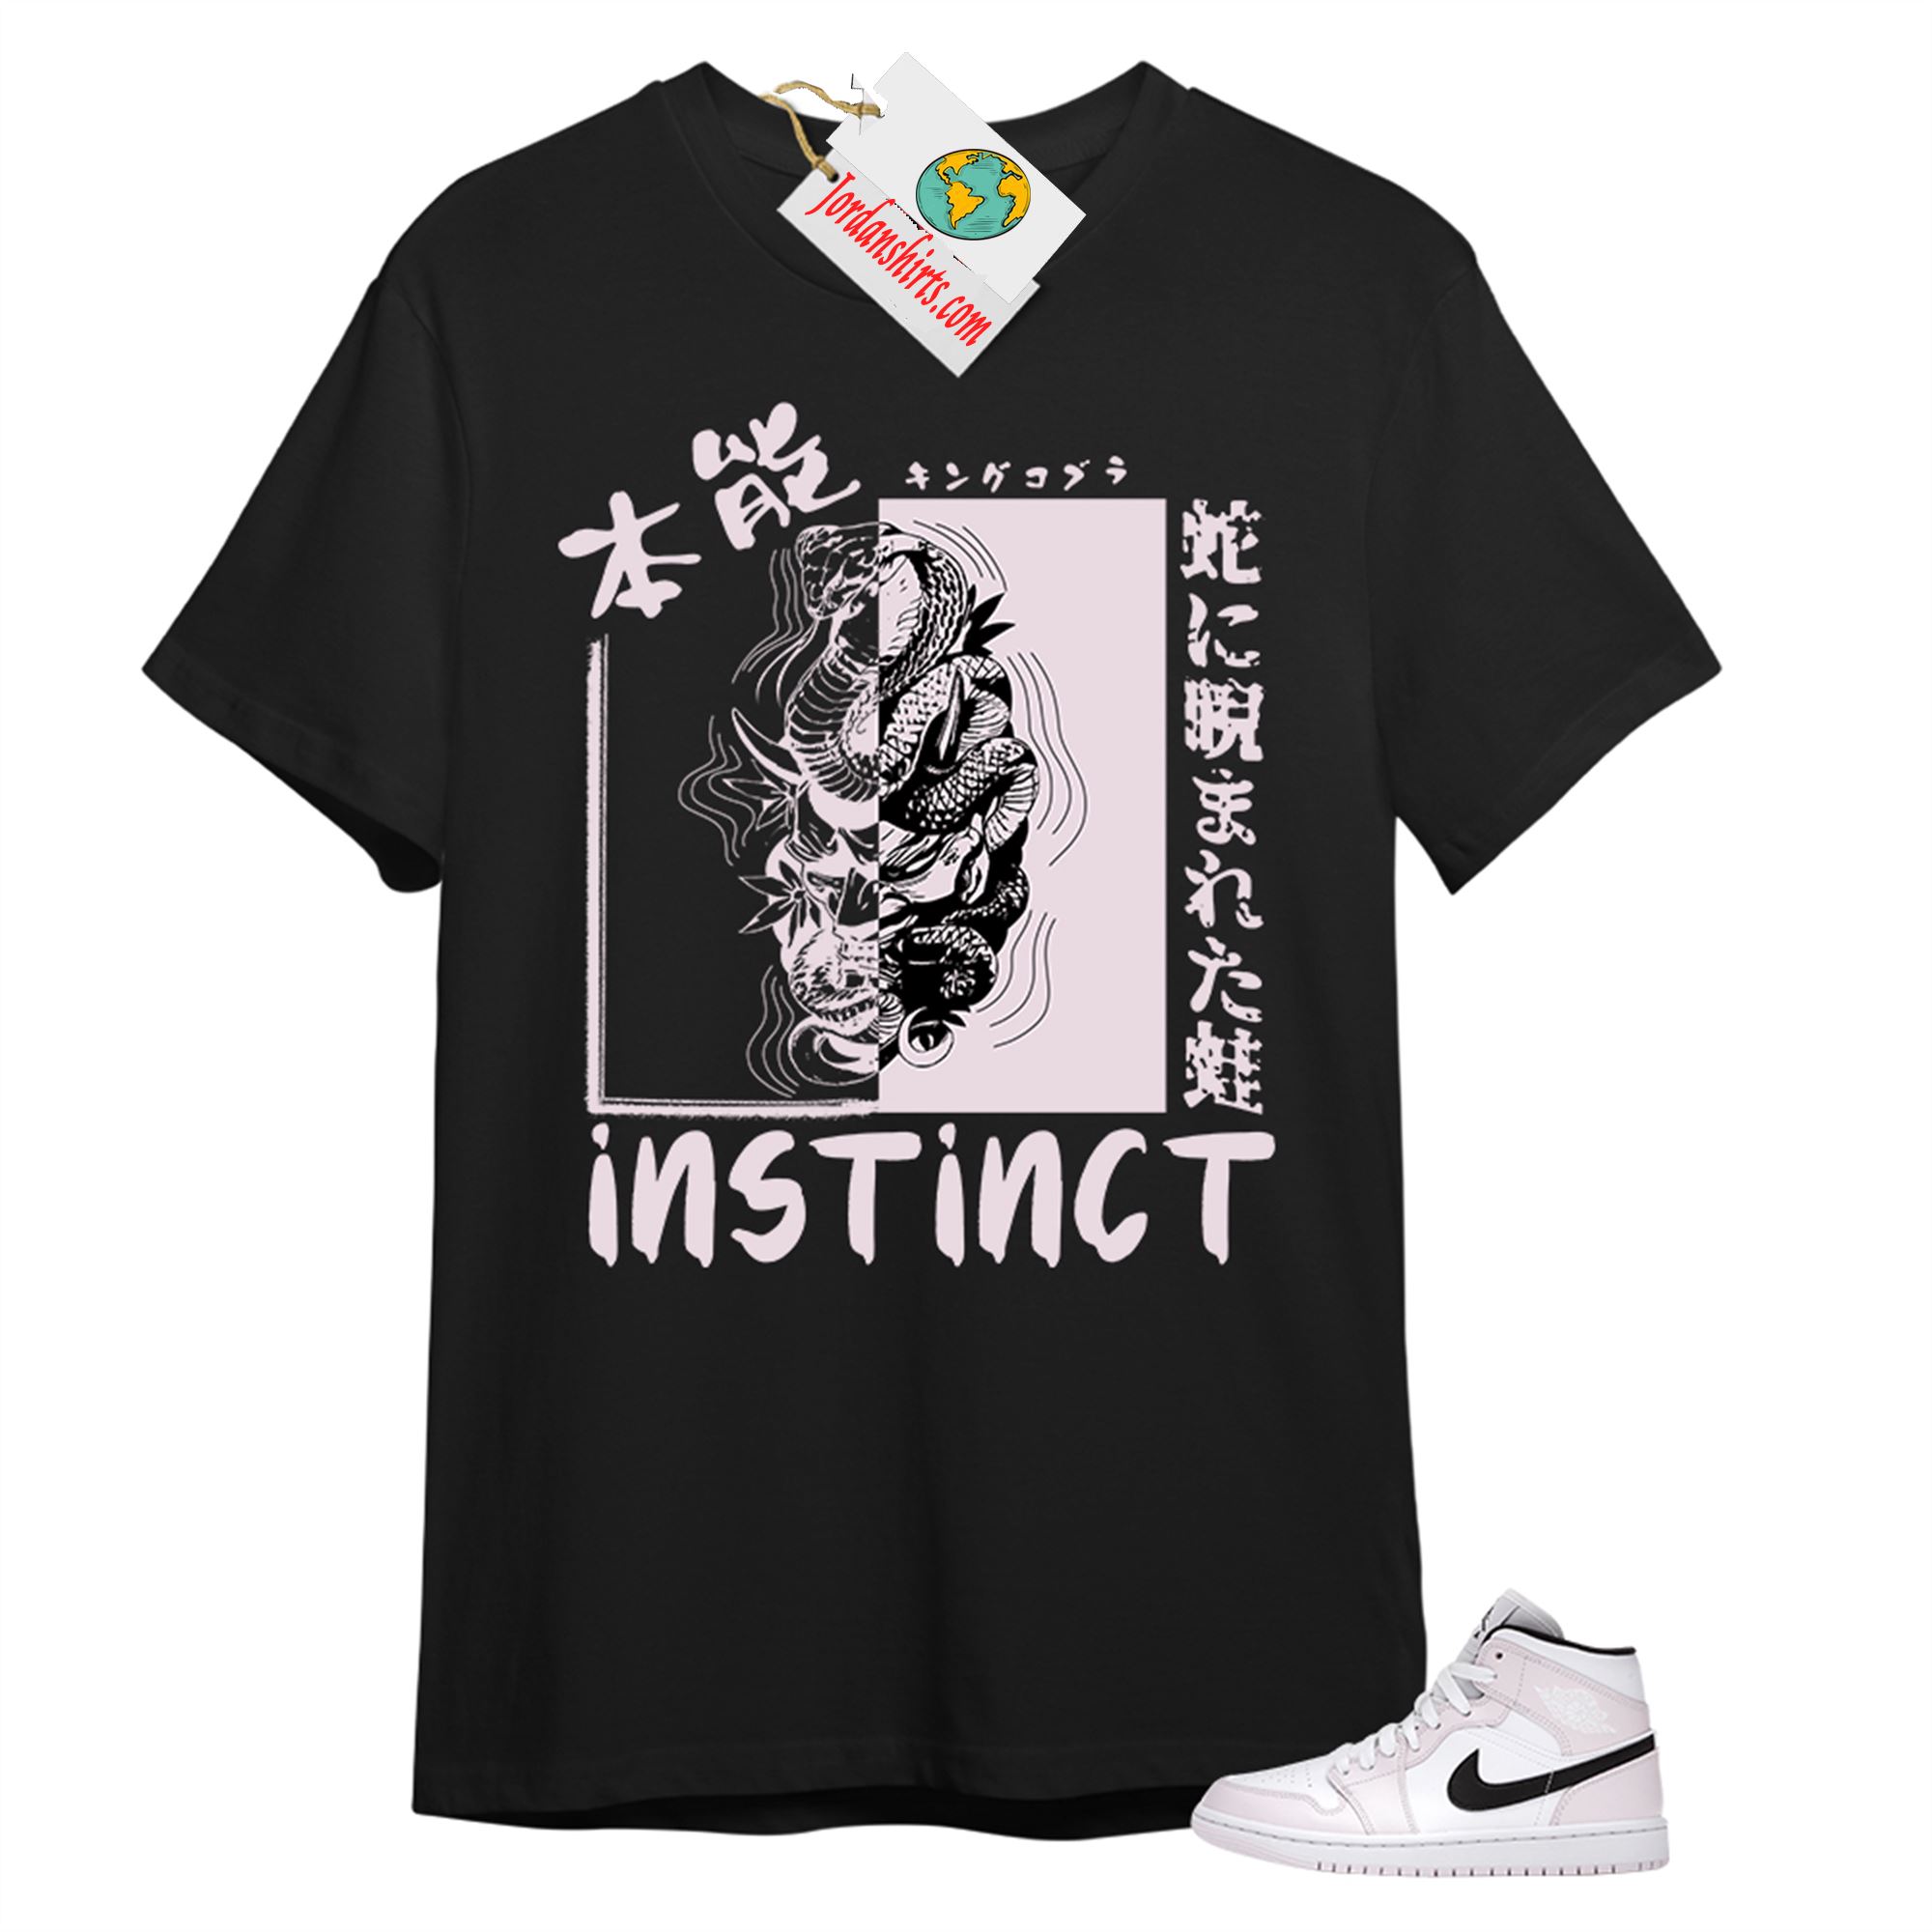 Jordan 1 Shirt, Instinct Fearless Snake Black T-shirt Air Jordan 1 Barely Rose 1s Size Up To 5xl